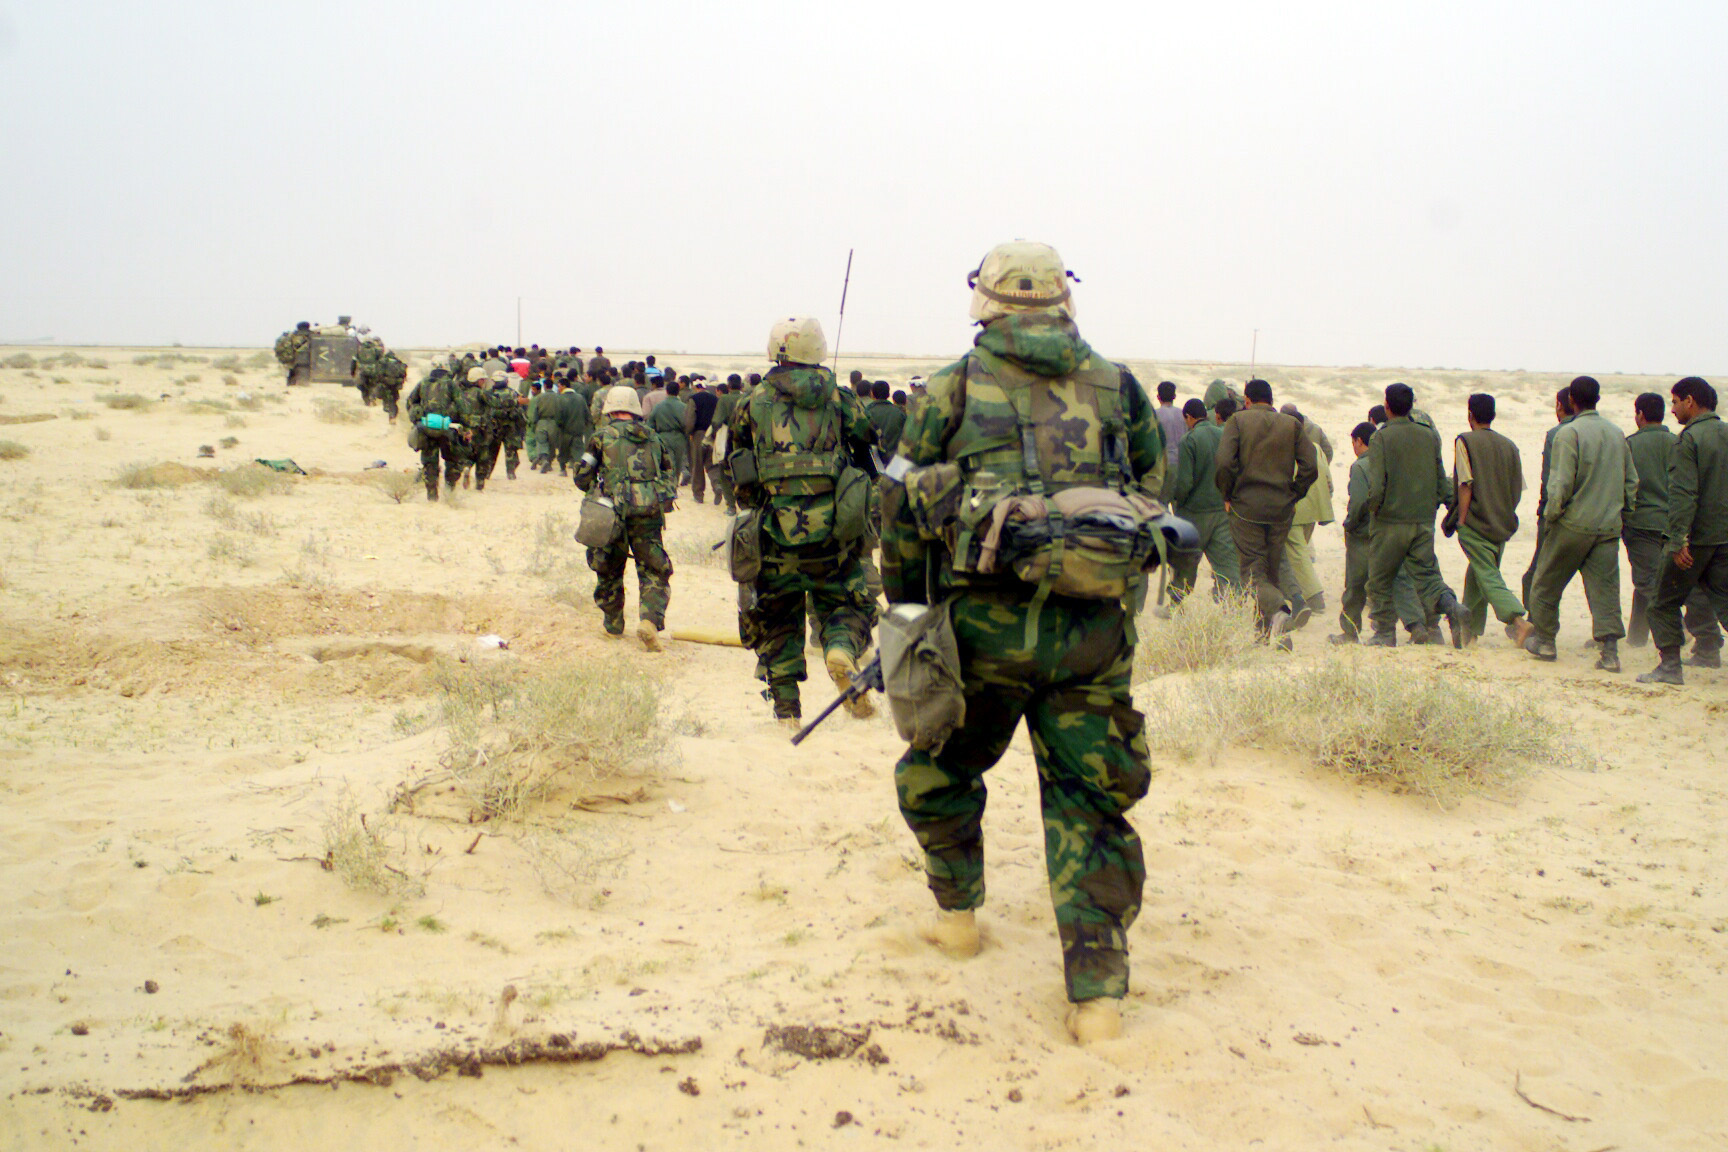 U.S._Marines_with_Iraqi_POWs_-_March_21,_2003.jpg